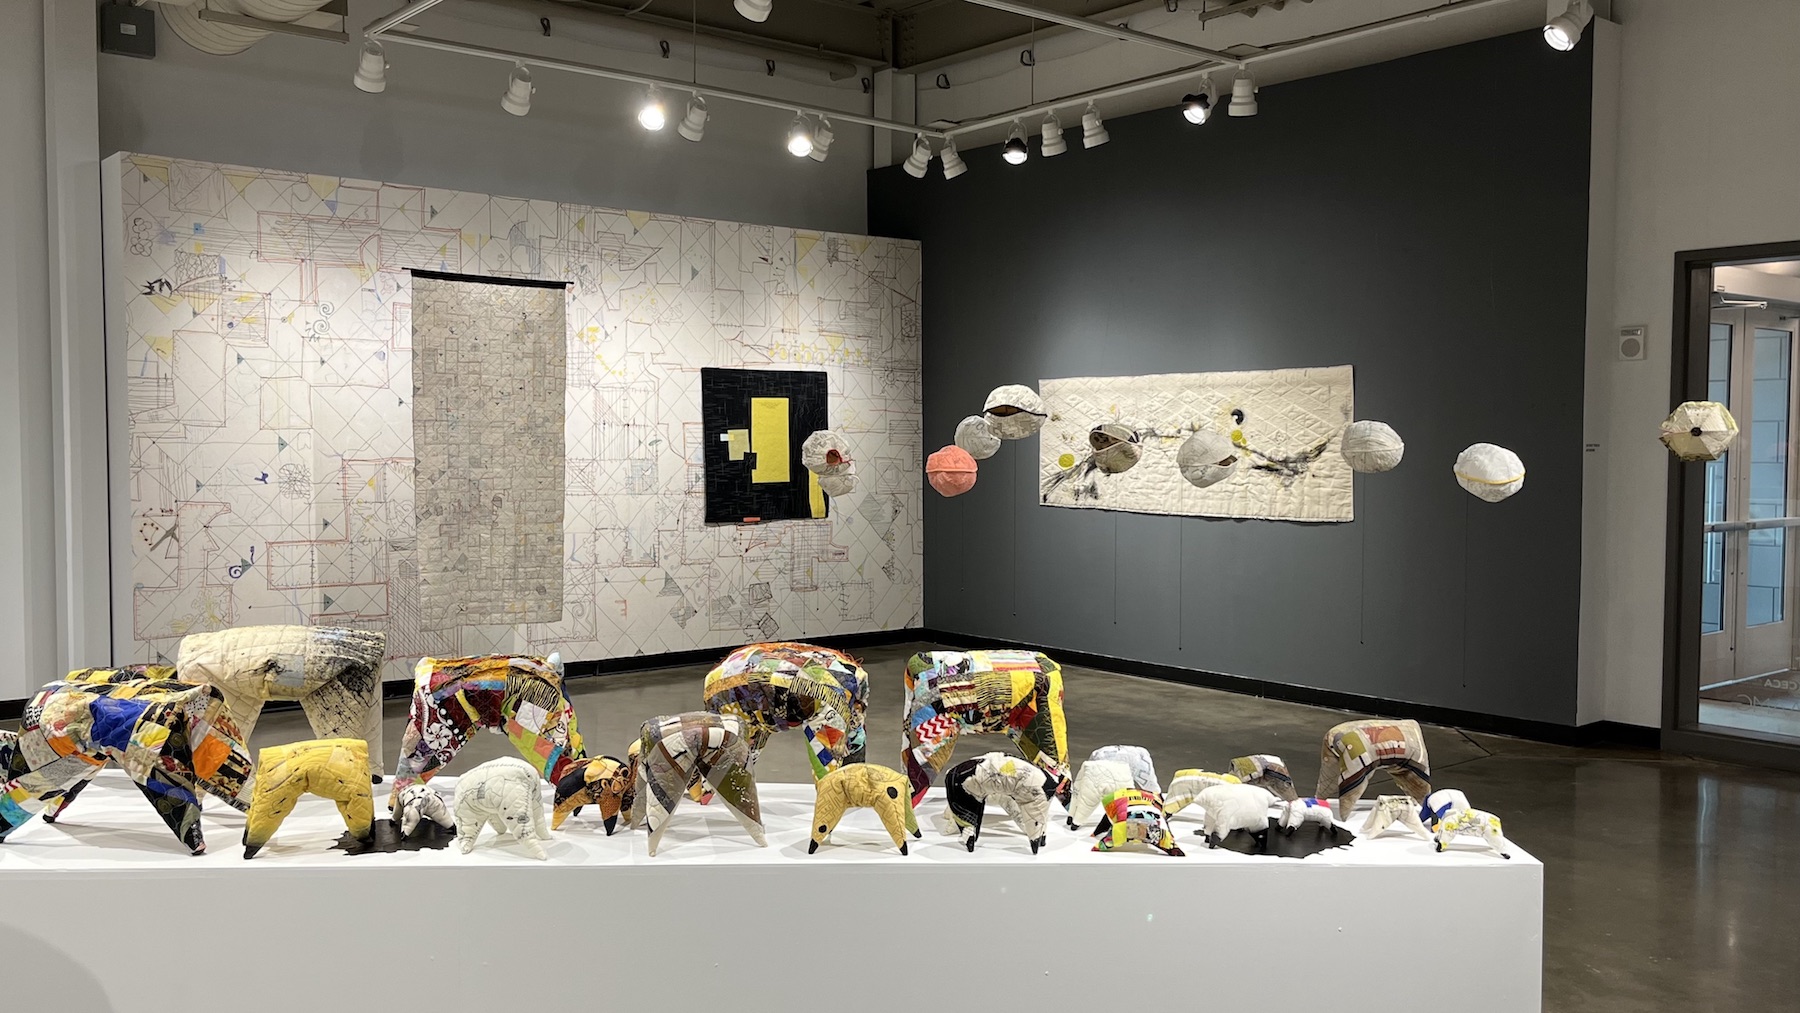 Follow the ‘Herd’ to The New Gallery – the work of Paula Kovarik opens exhibition season 